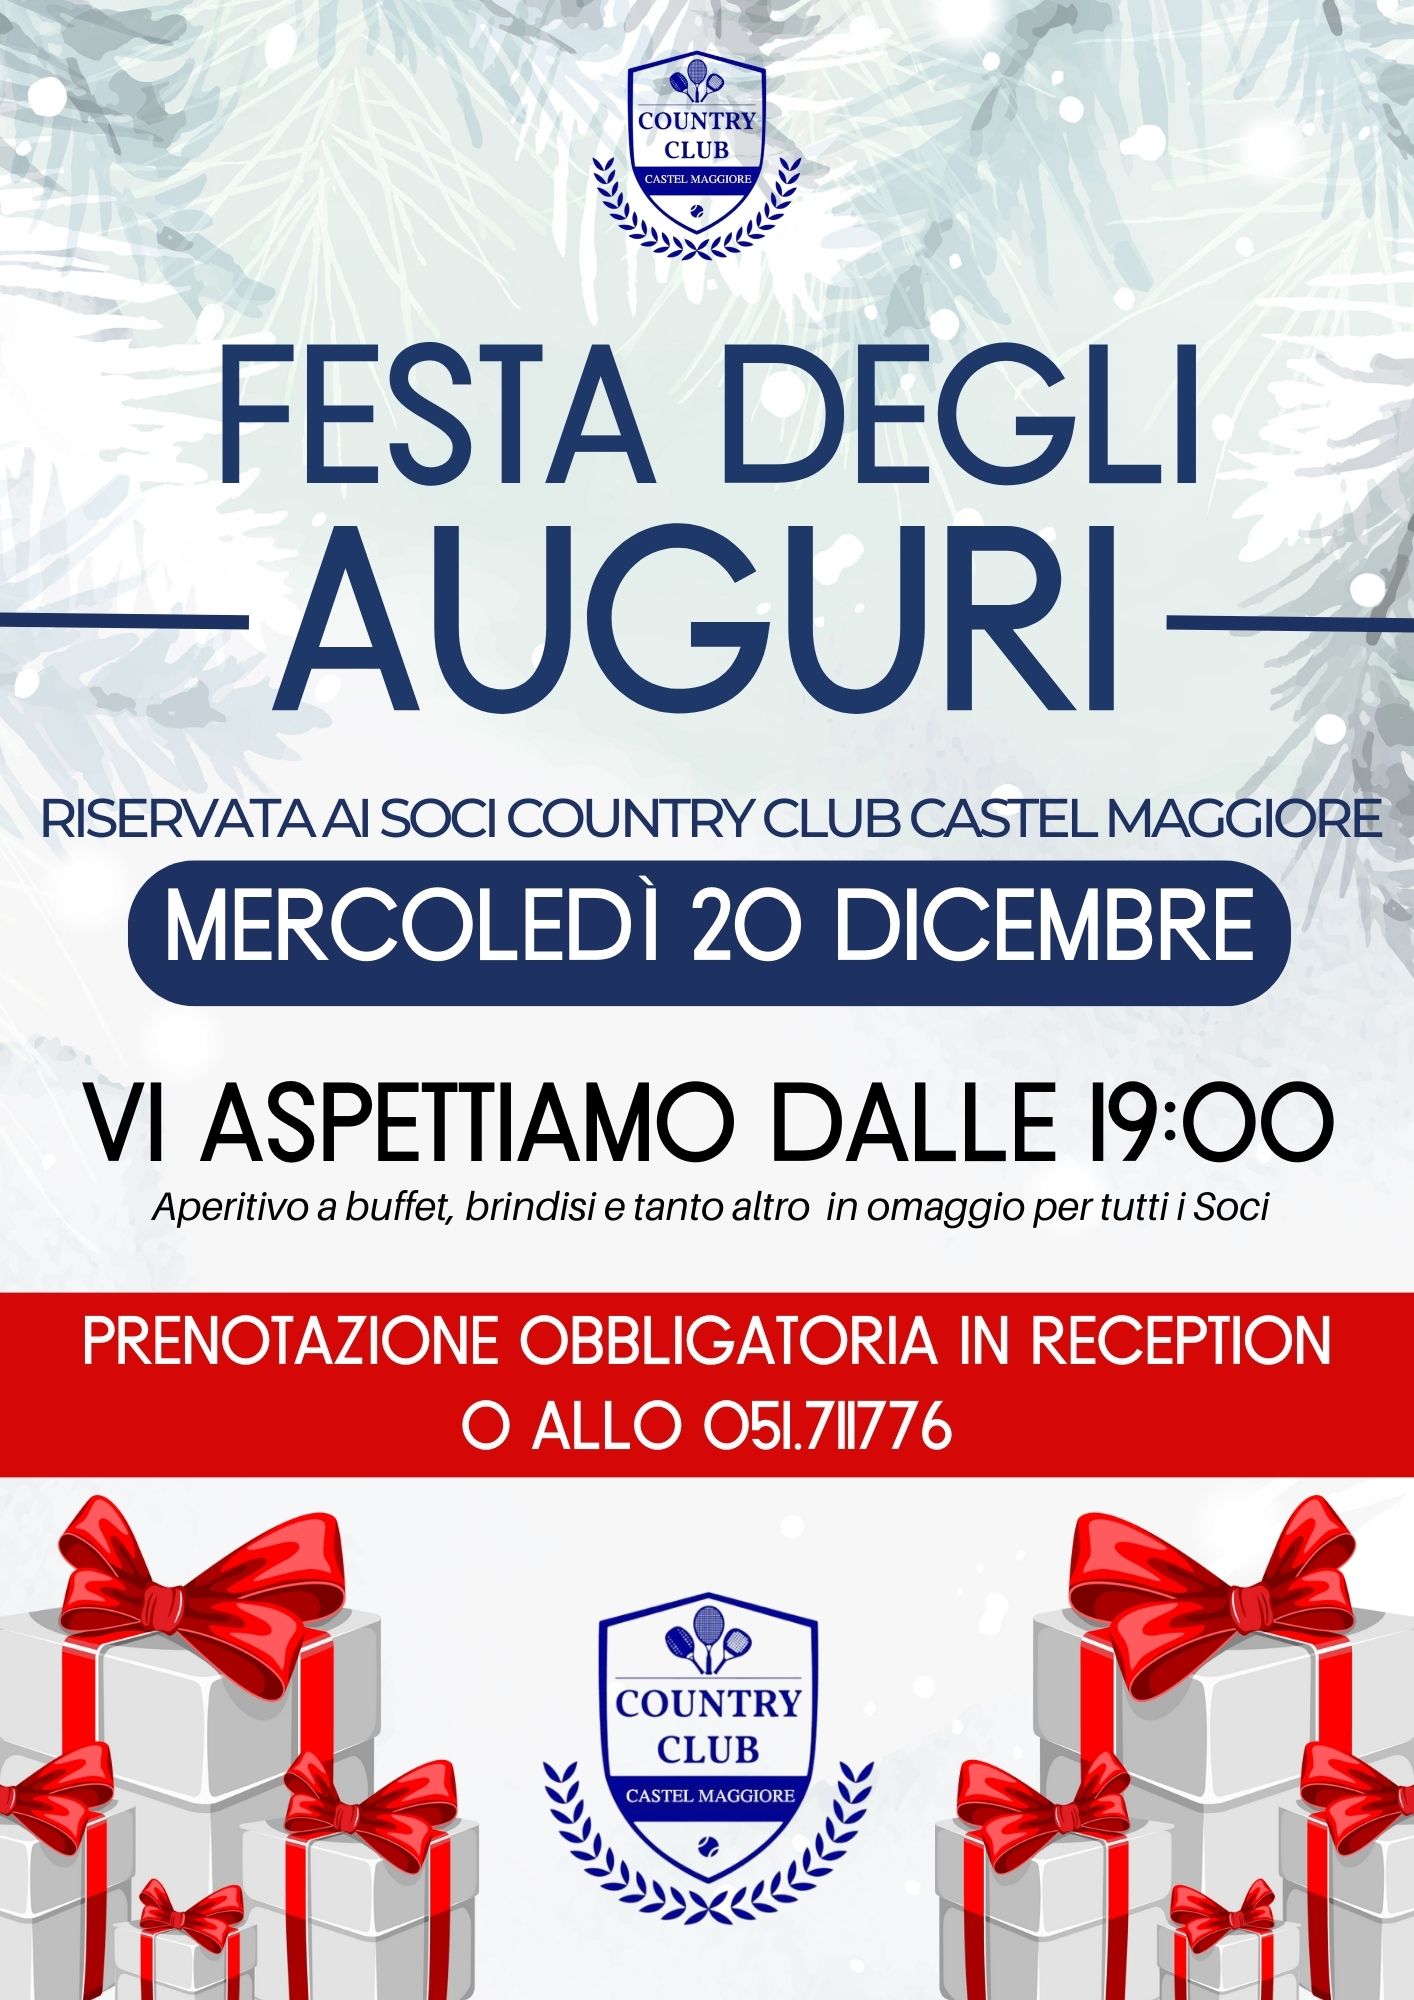 FESTA DEGLI AUGURI | Country Club Bologna